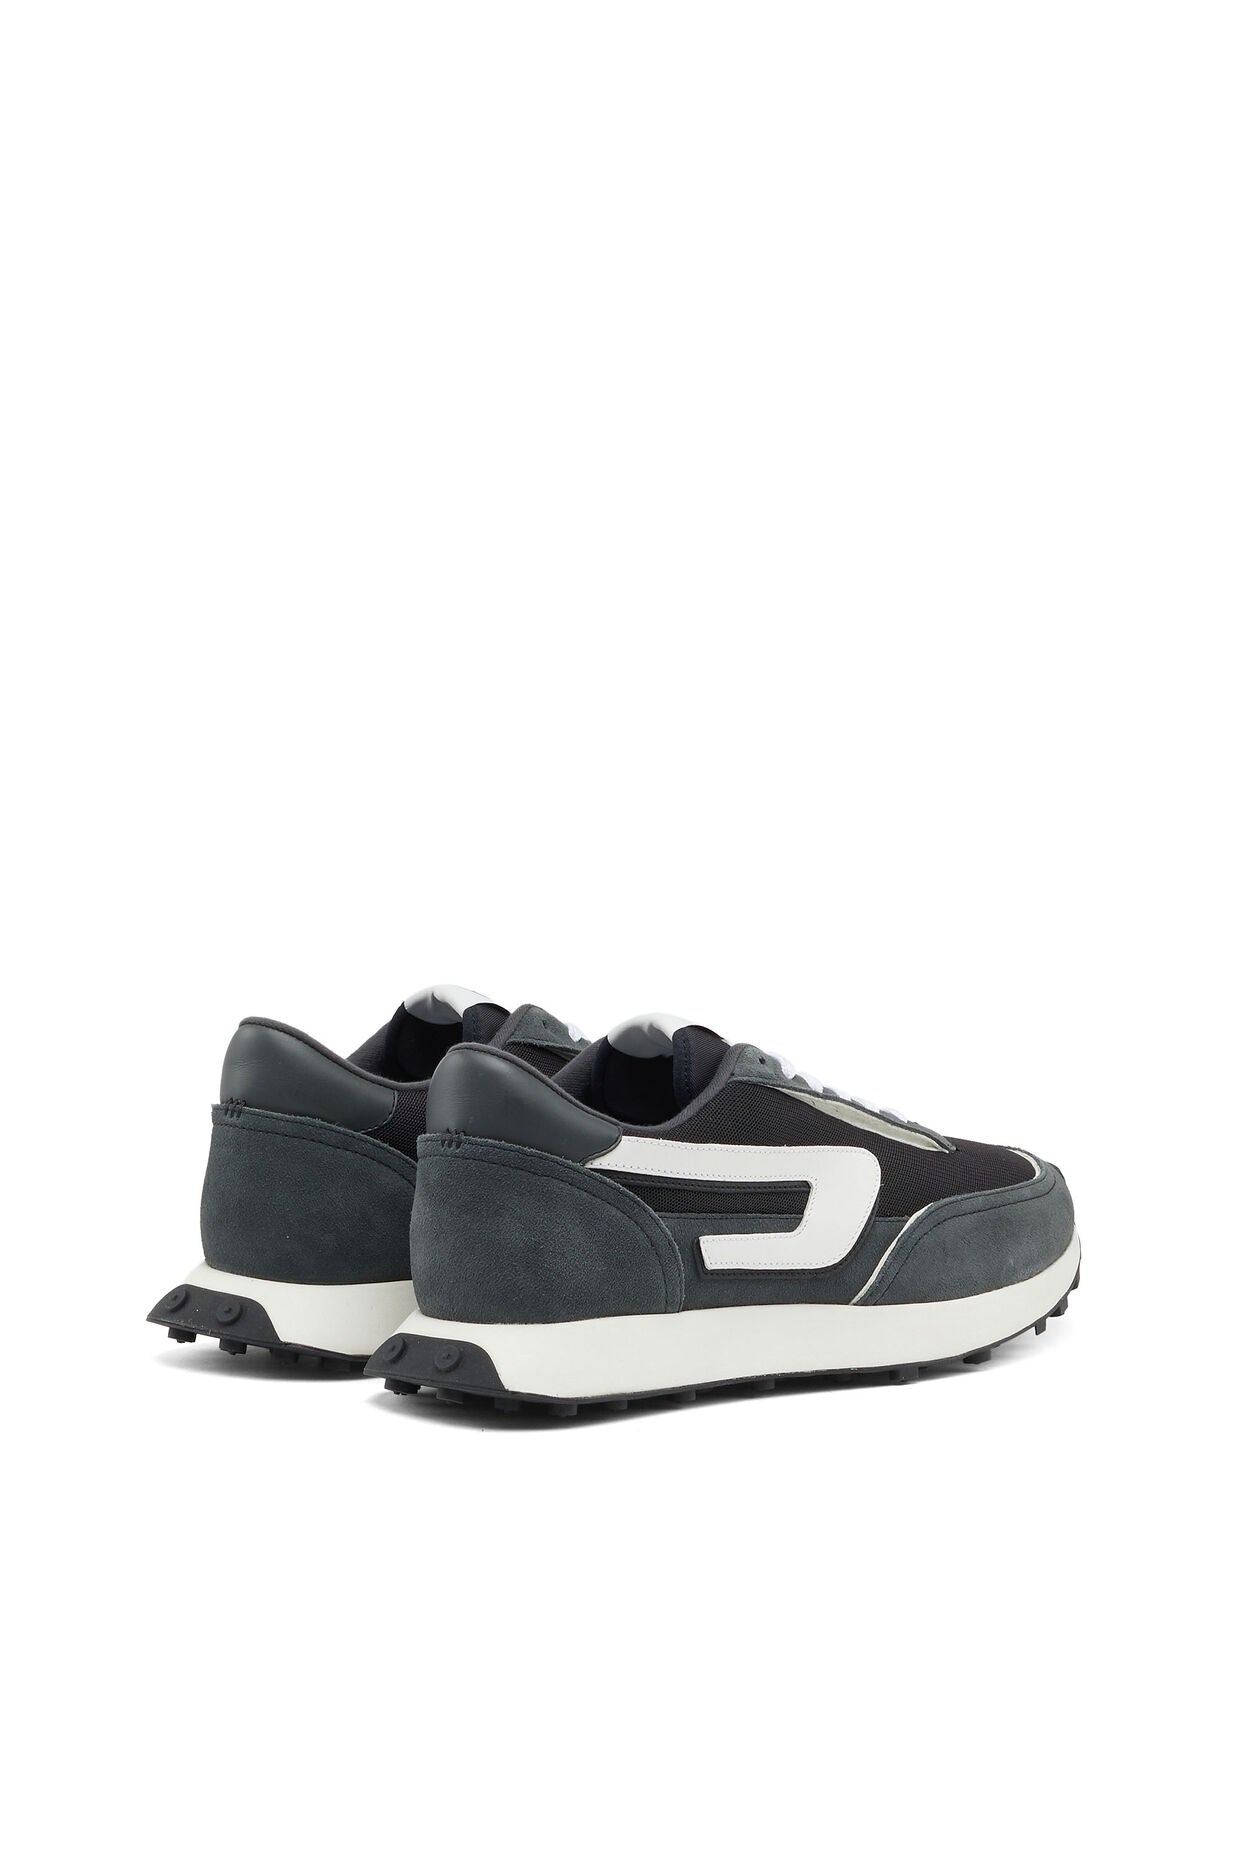 Gray Diesel shoes 